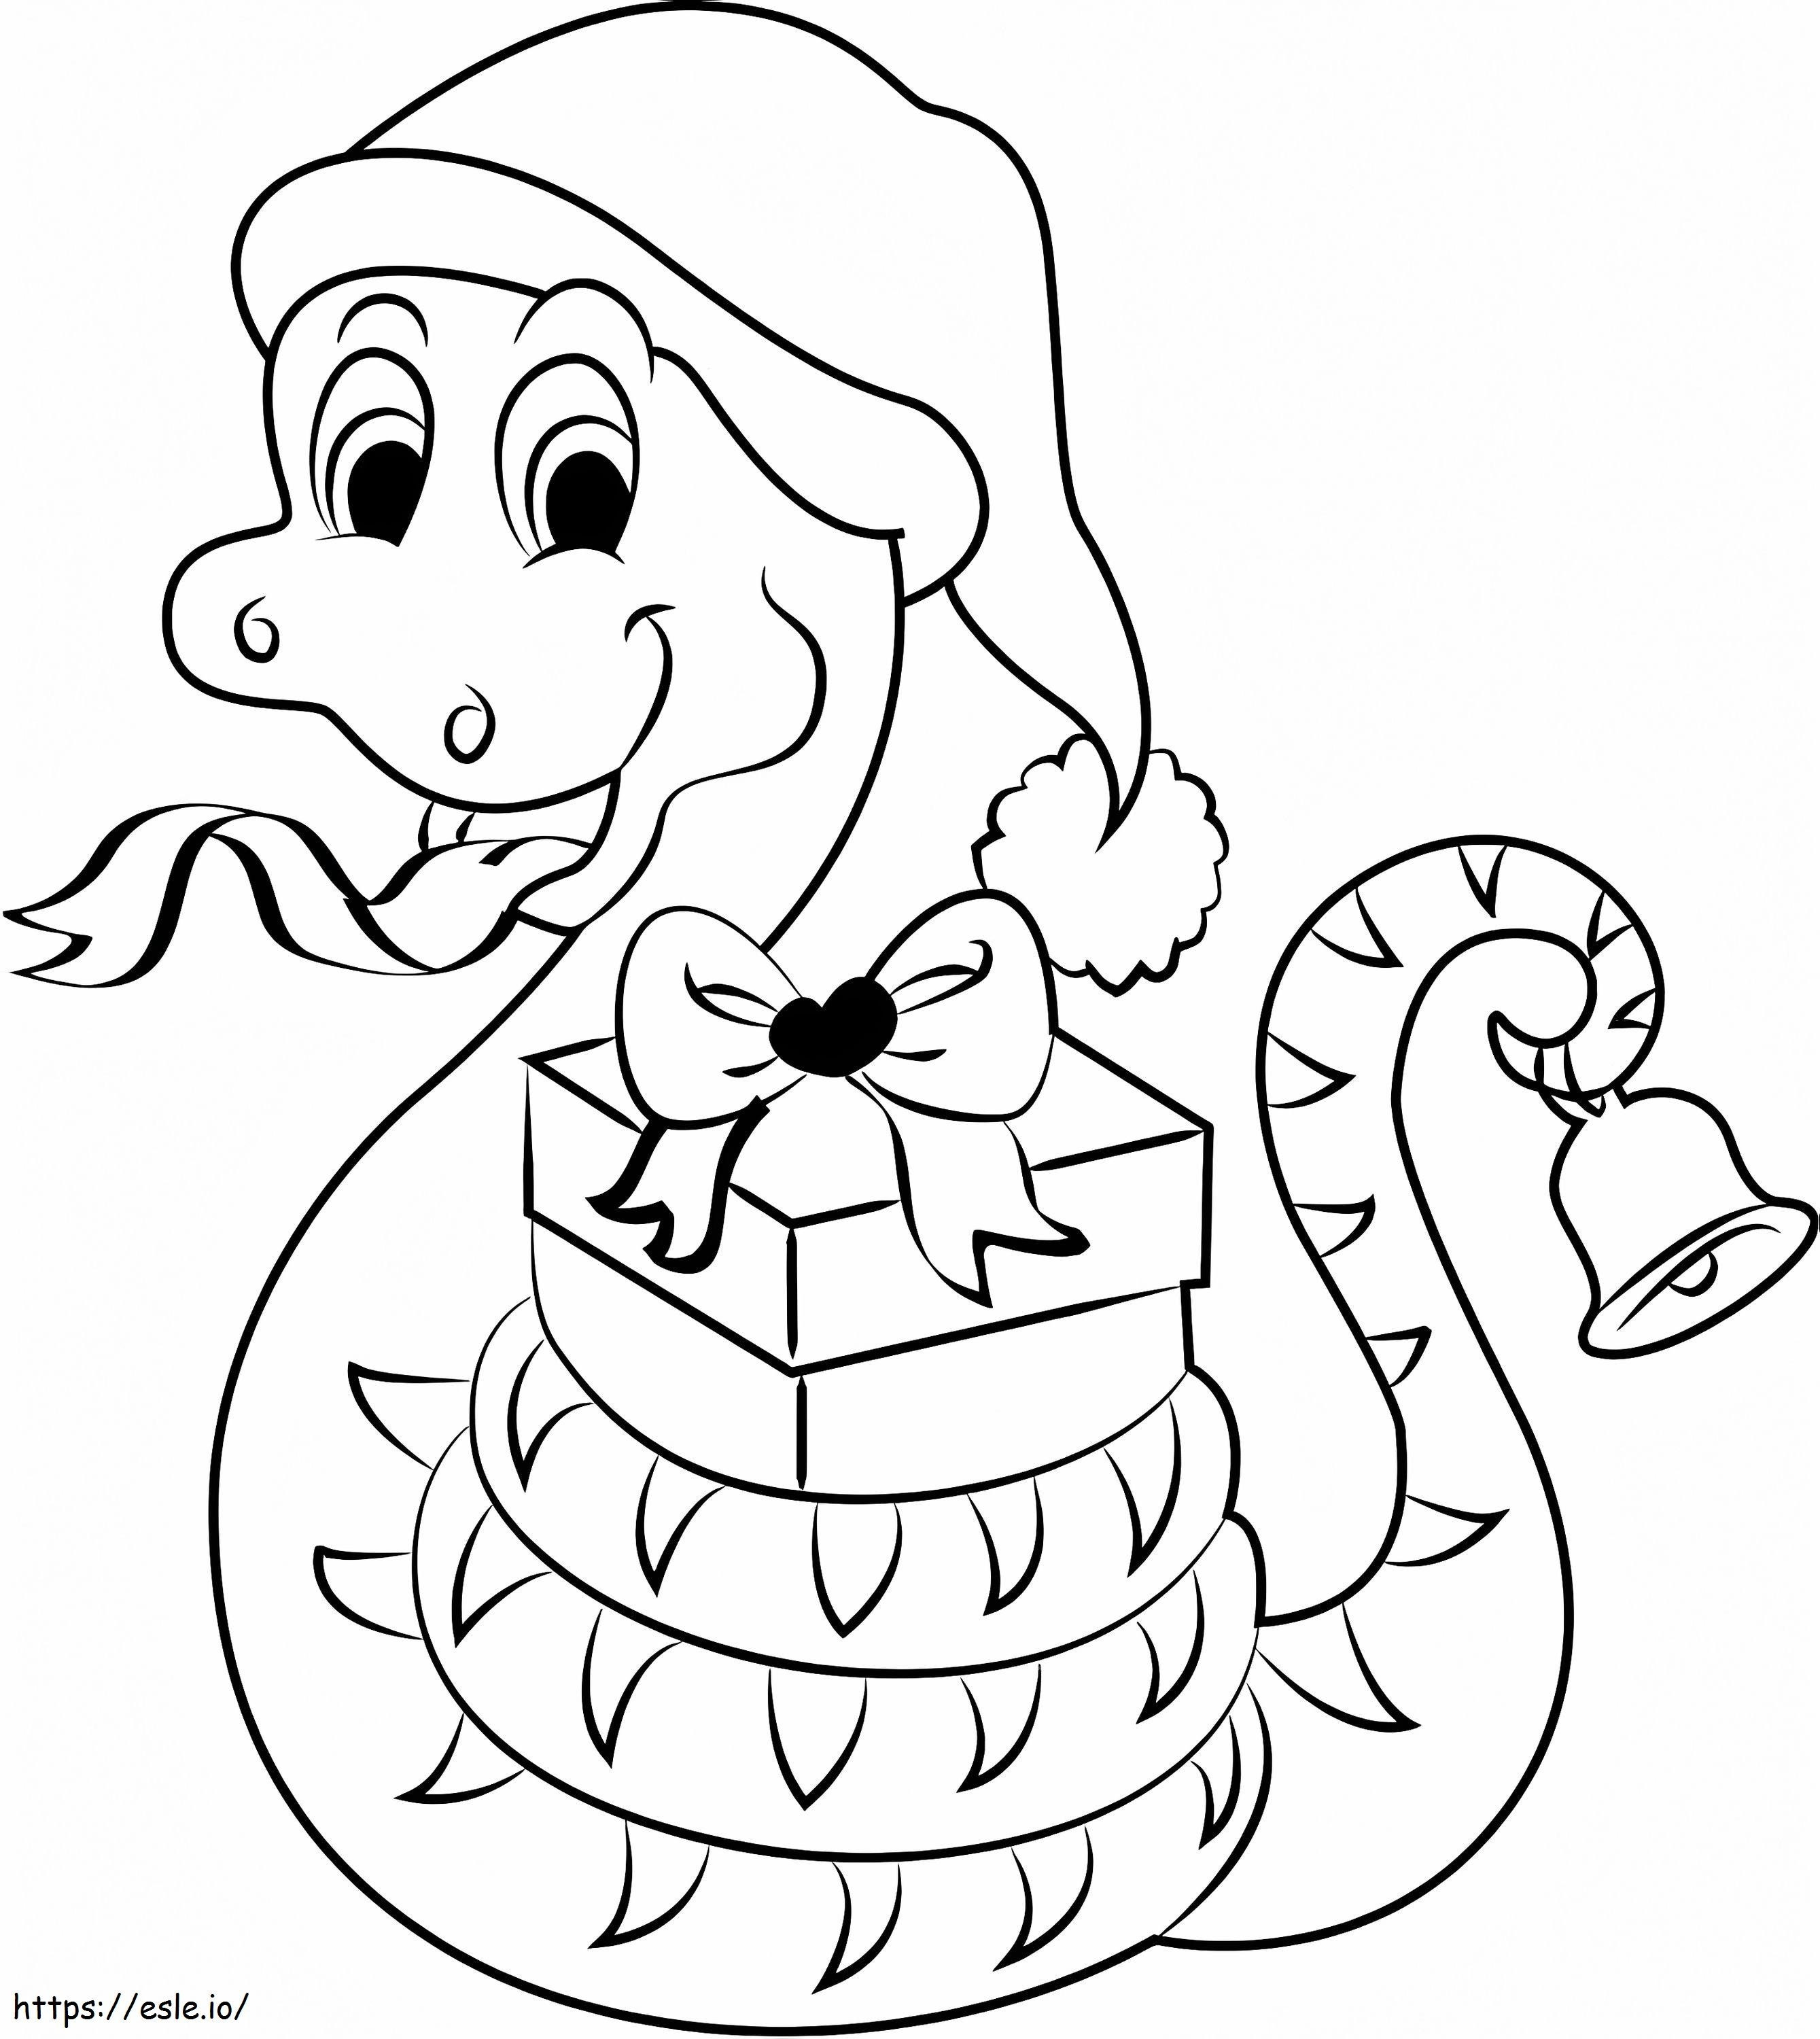 Coloriage Serpent de Noël 1 à imprimer dessin